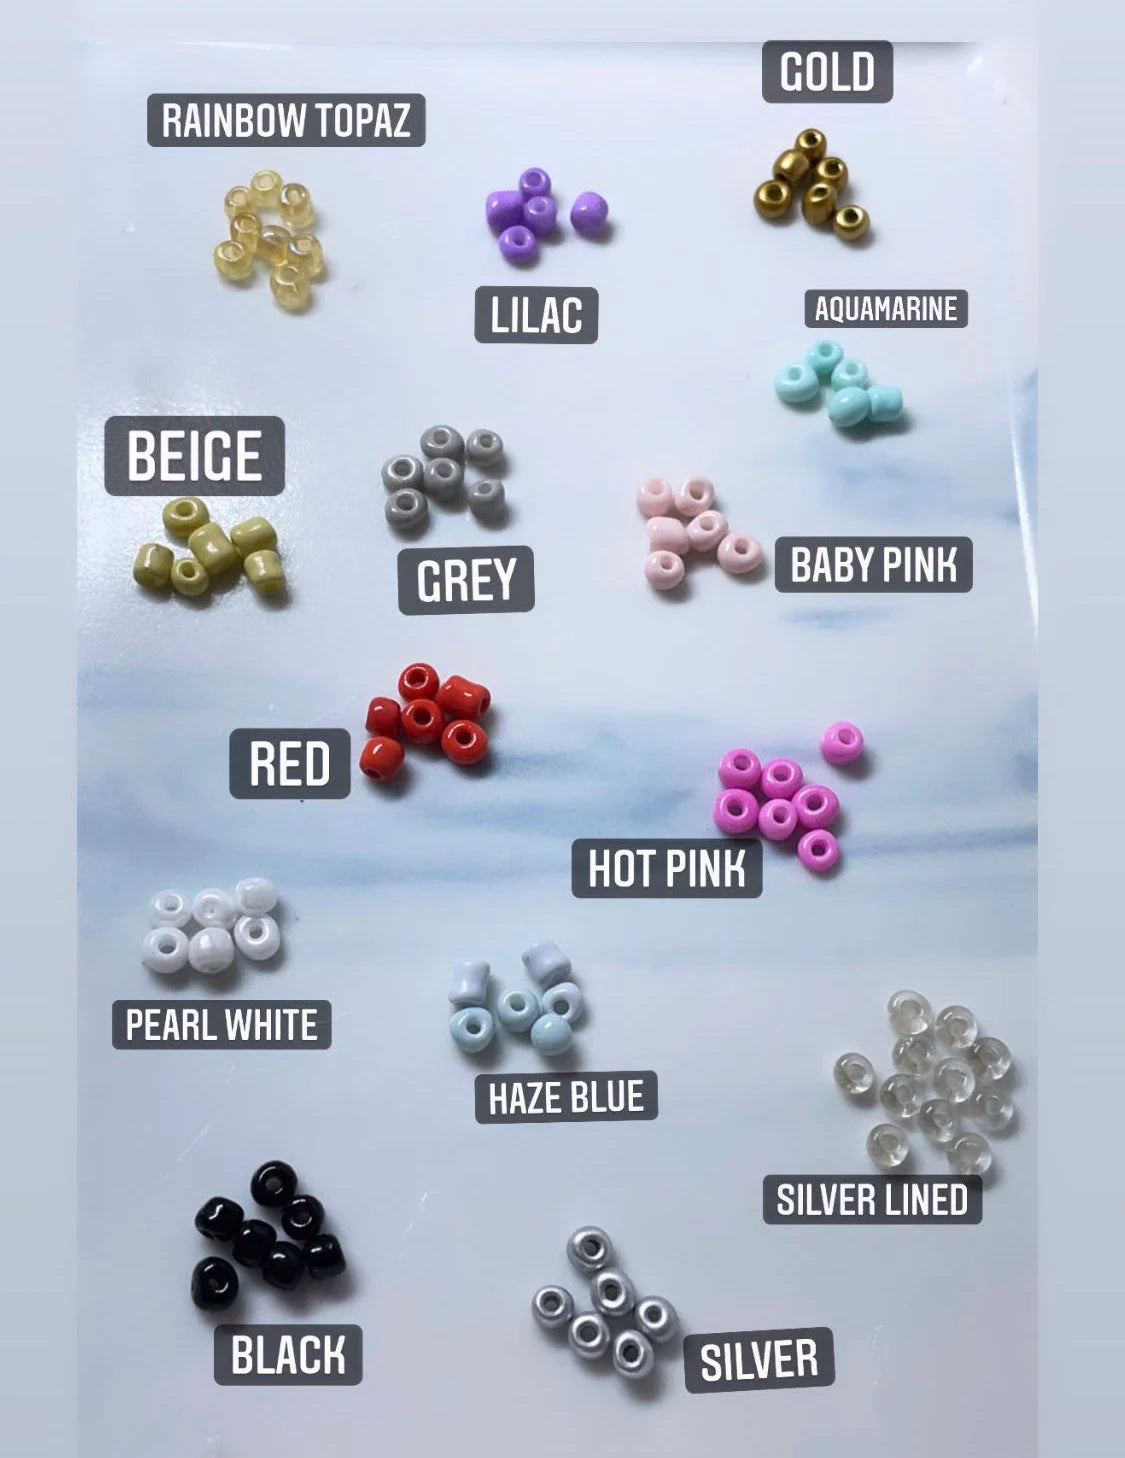 Personalised diamanté hamsa name bracelets coloured glass seed beads